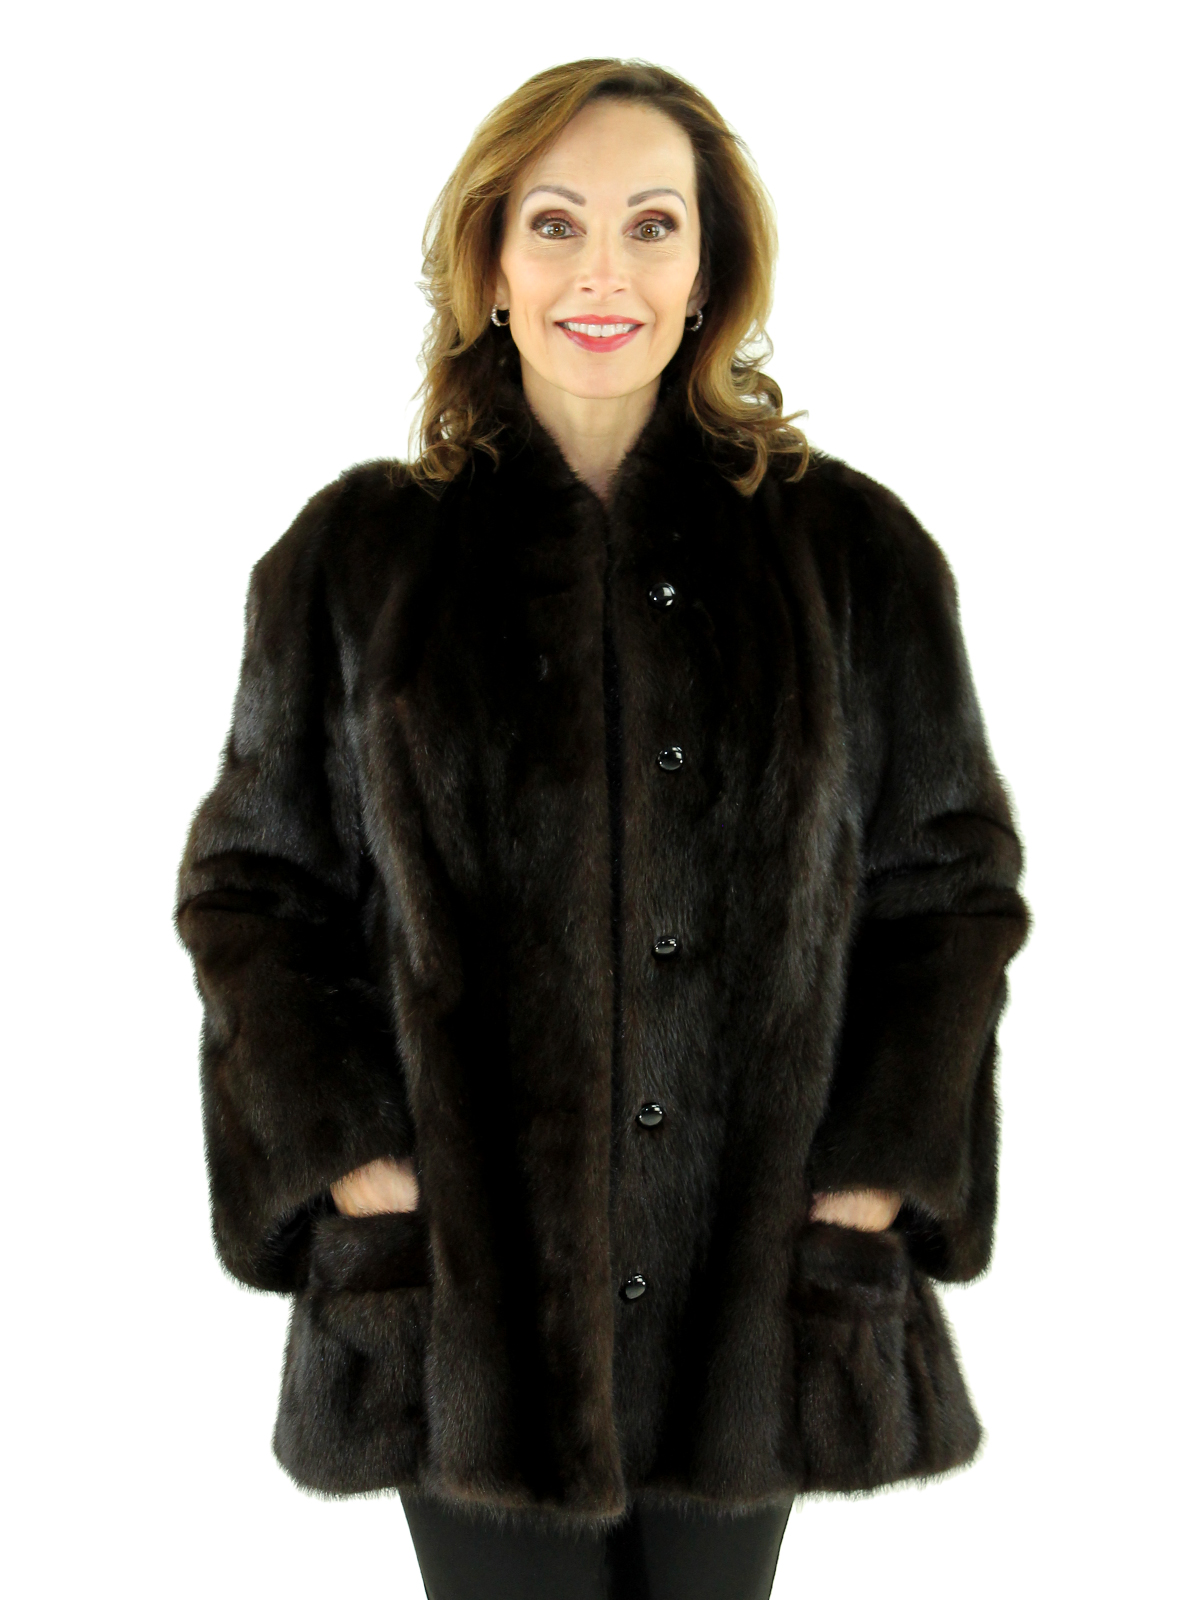 Ranch Mink Fur Jacket - Women's Fur Jacket - Small| Estate Furs